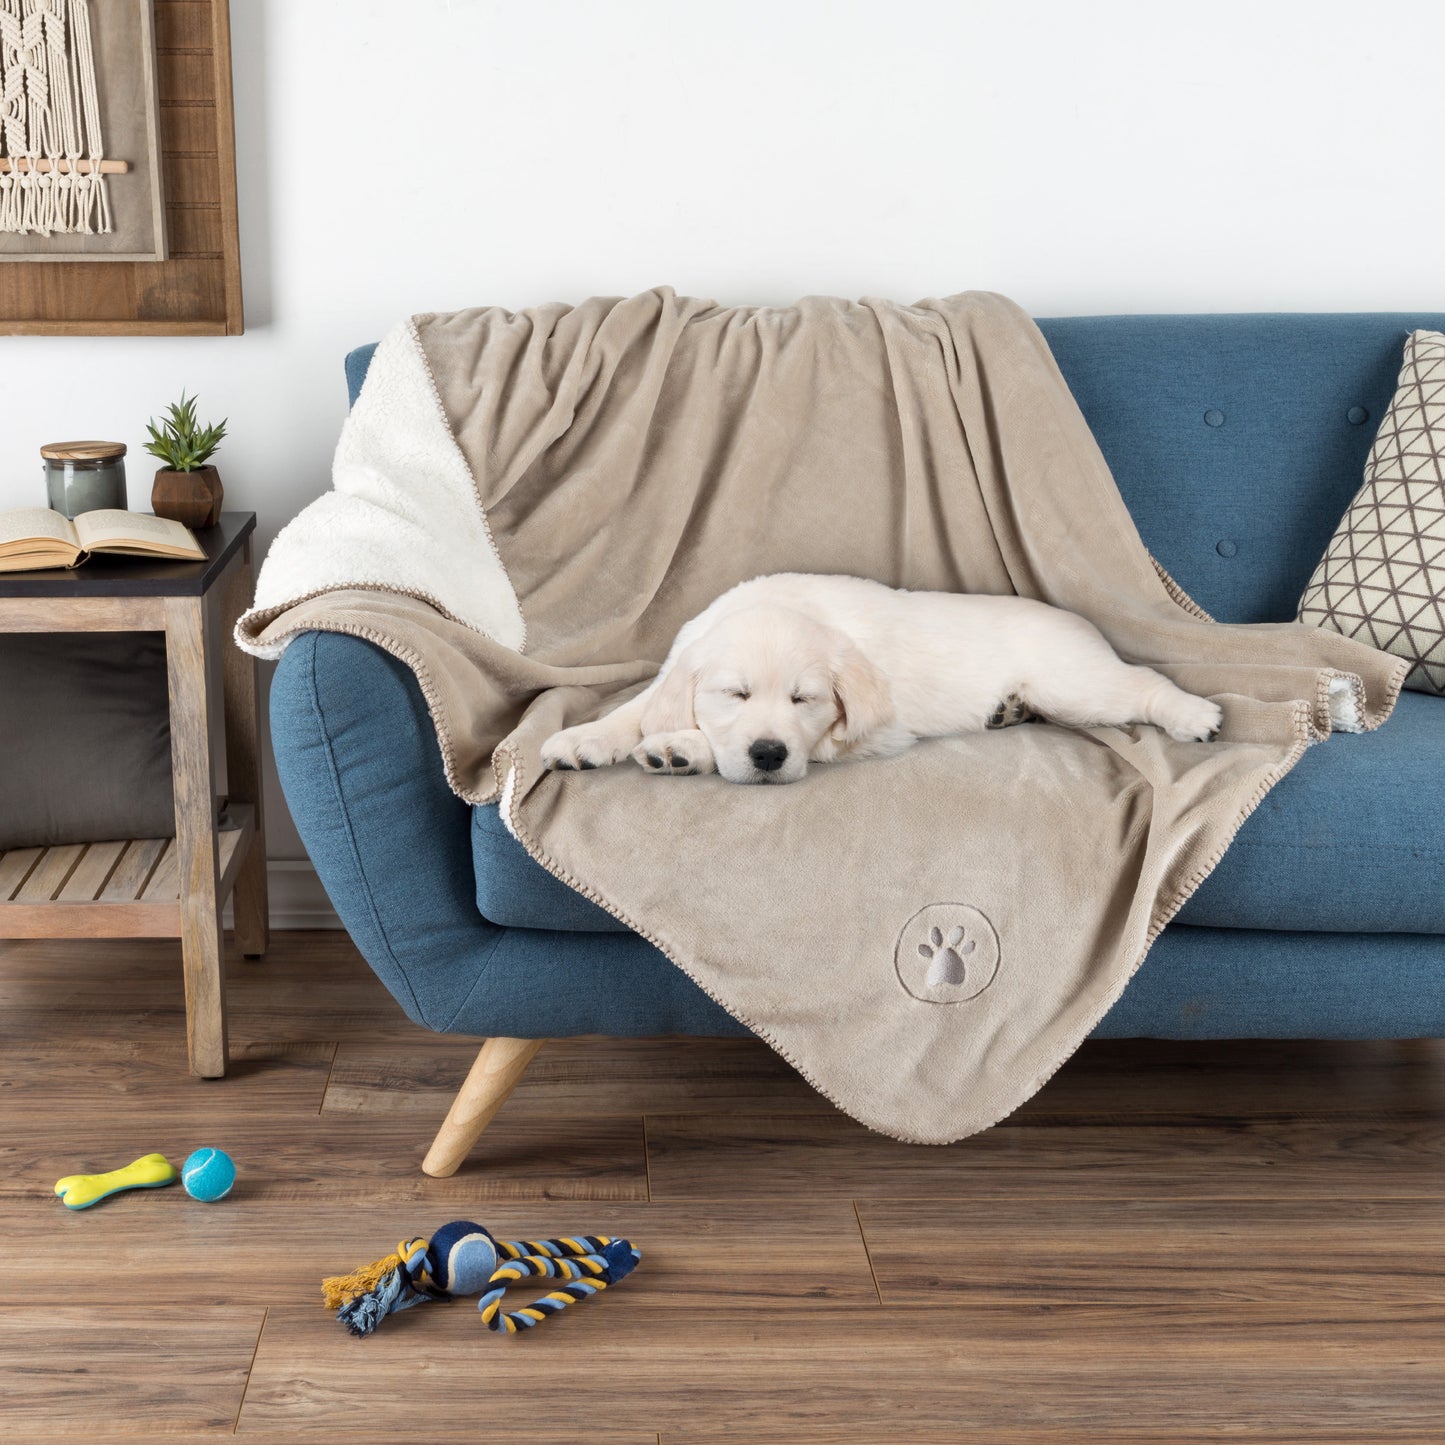 PETMAKER 50x60-Inch Waterproof Dog Blanket, Tan